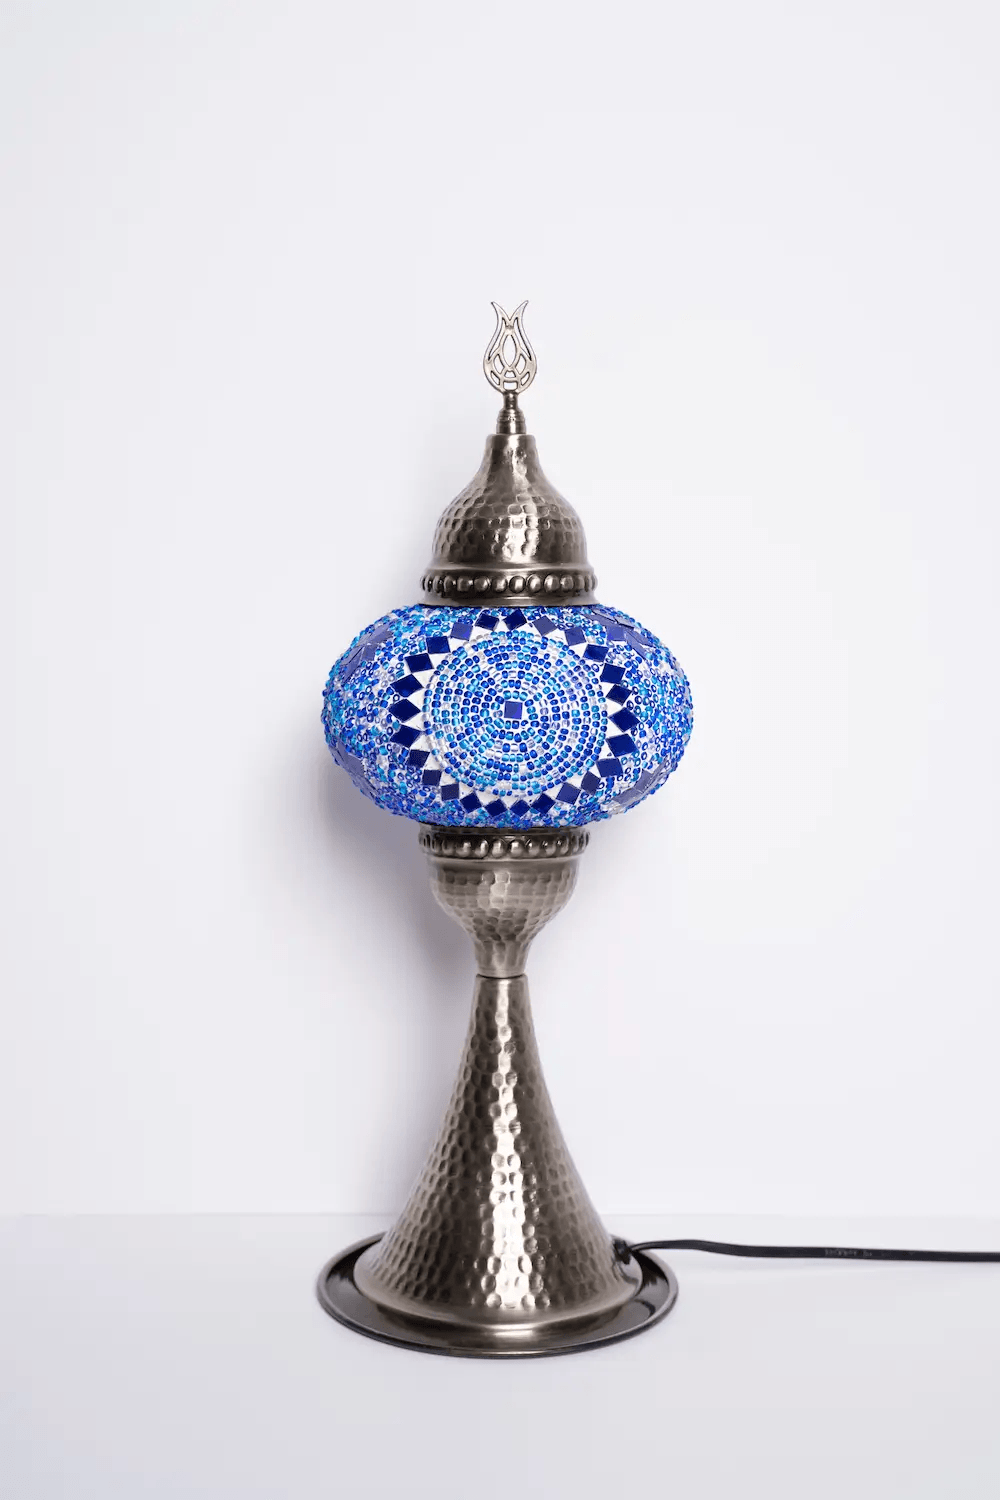 Elite Turkish Mosaic Glass Decorative Table Lamps - Blue Center Circle - Unique Custom Moroccan Lamp Shades - KAFTHAN